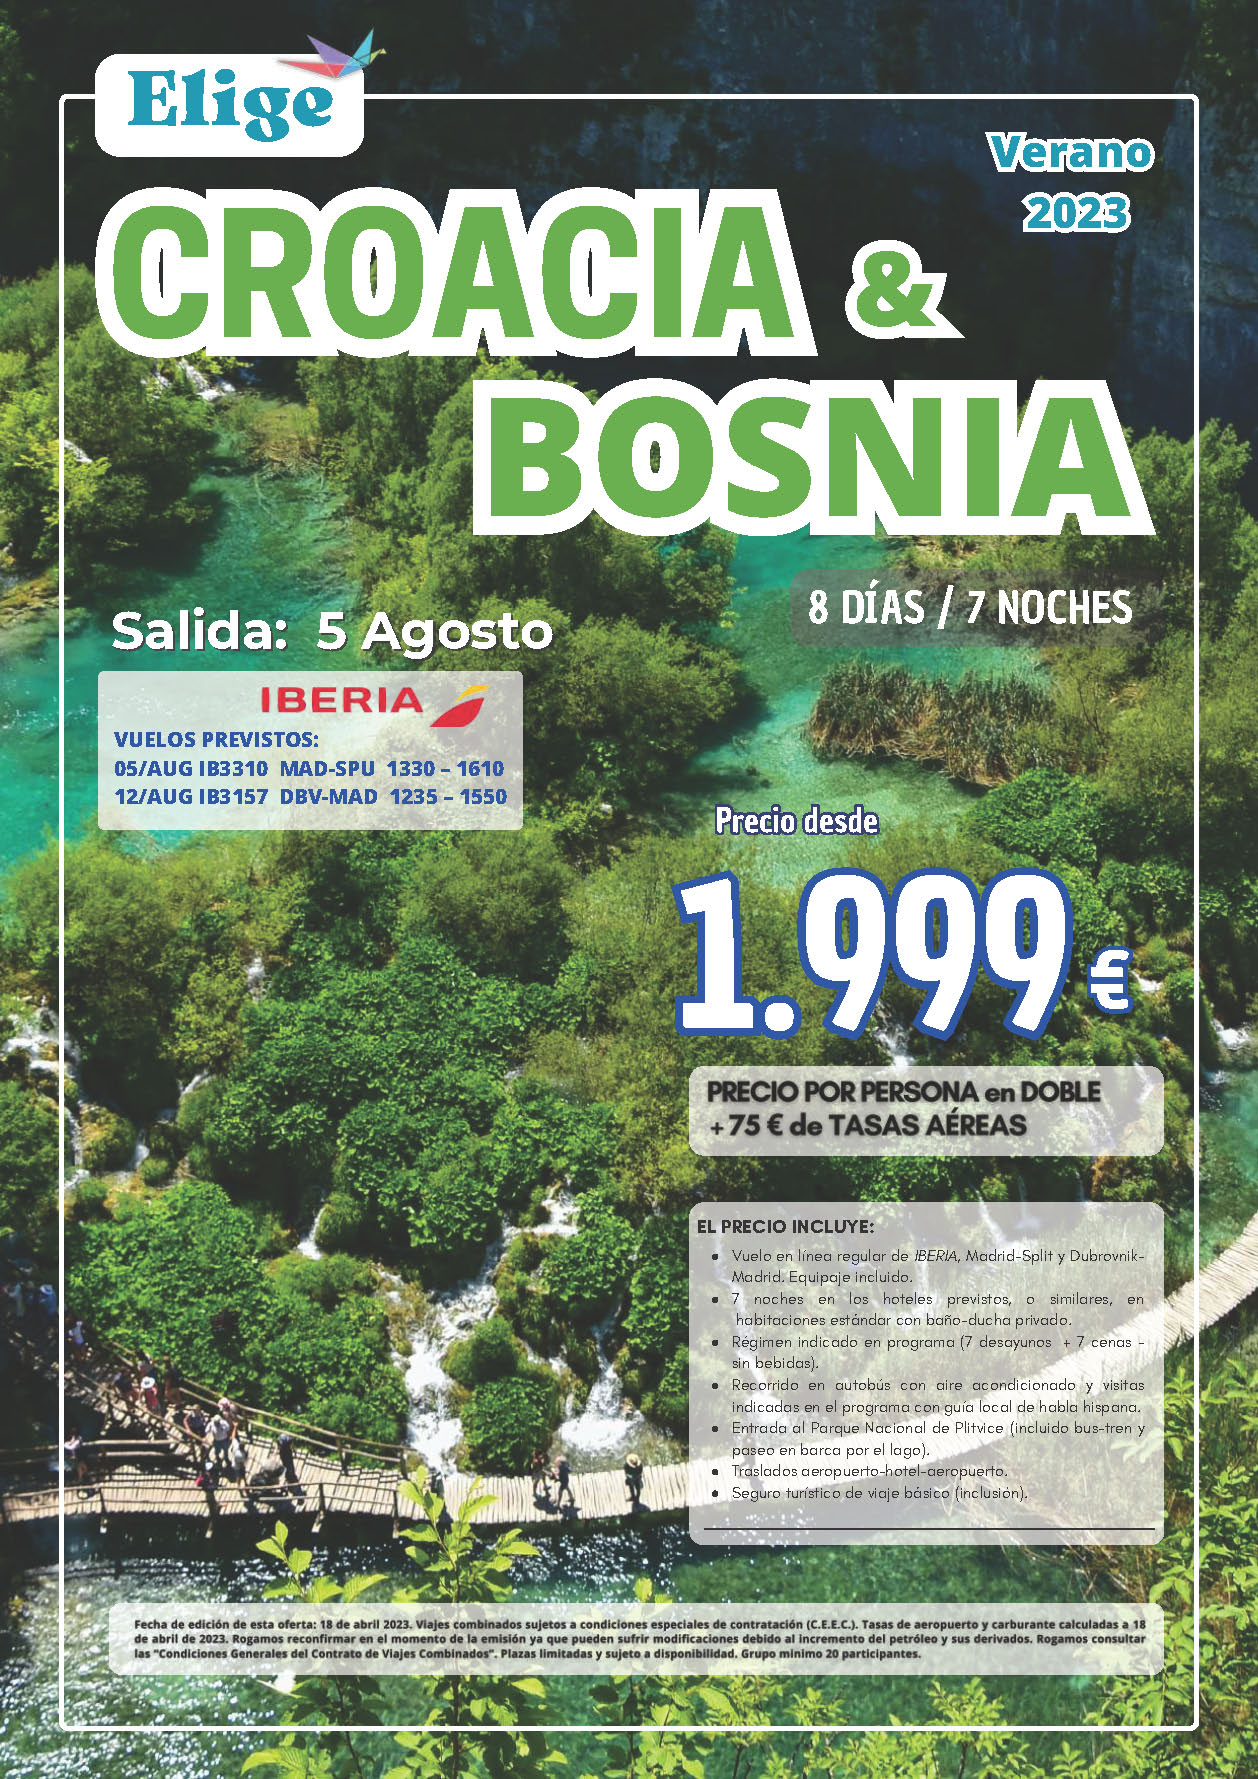 Oferta Elige tu Viaje 5 Agosto 2023 circuito Croacia y Bosnia 8 dias salidas desde Madrid vuelos Iberia